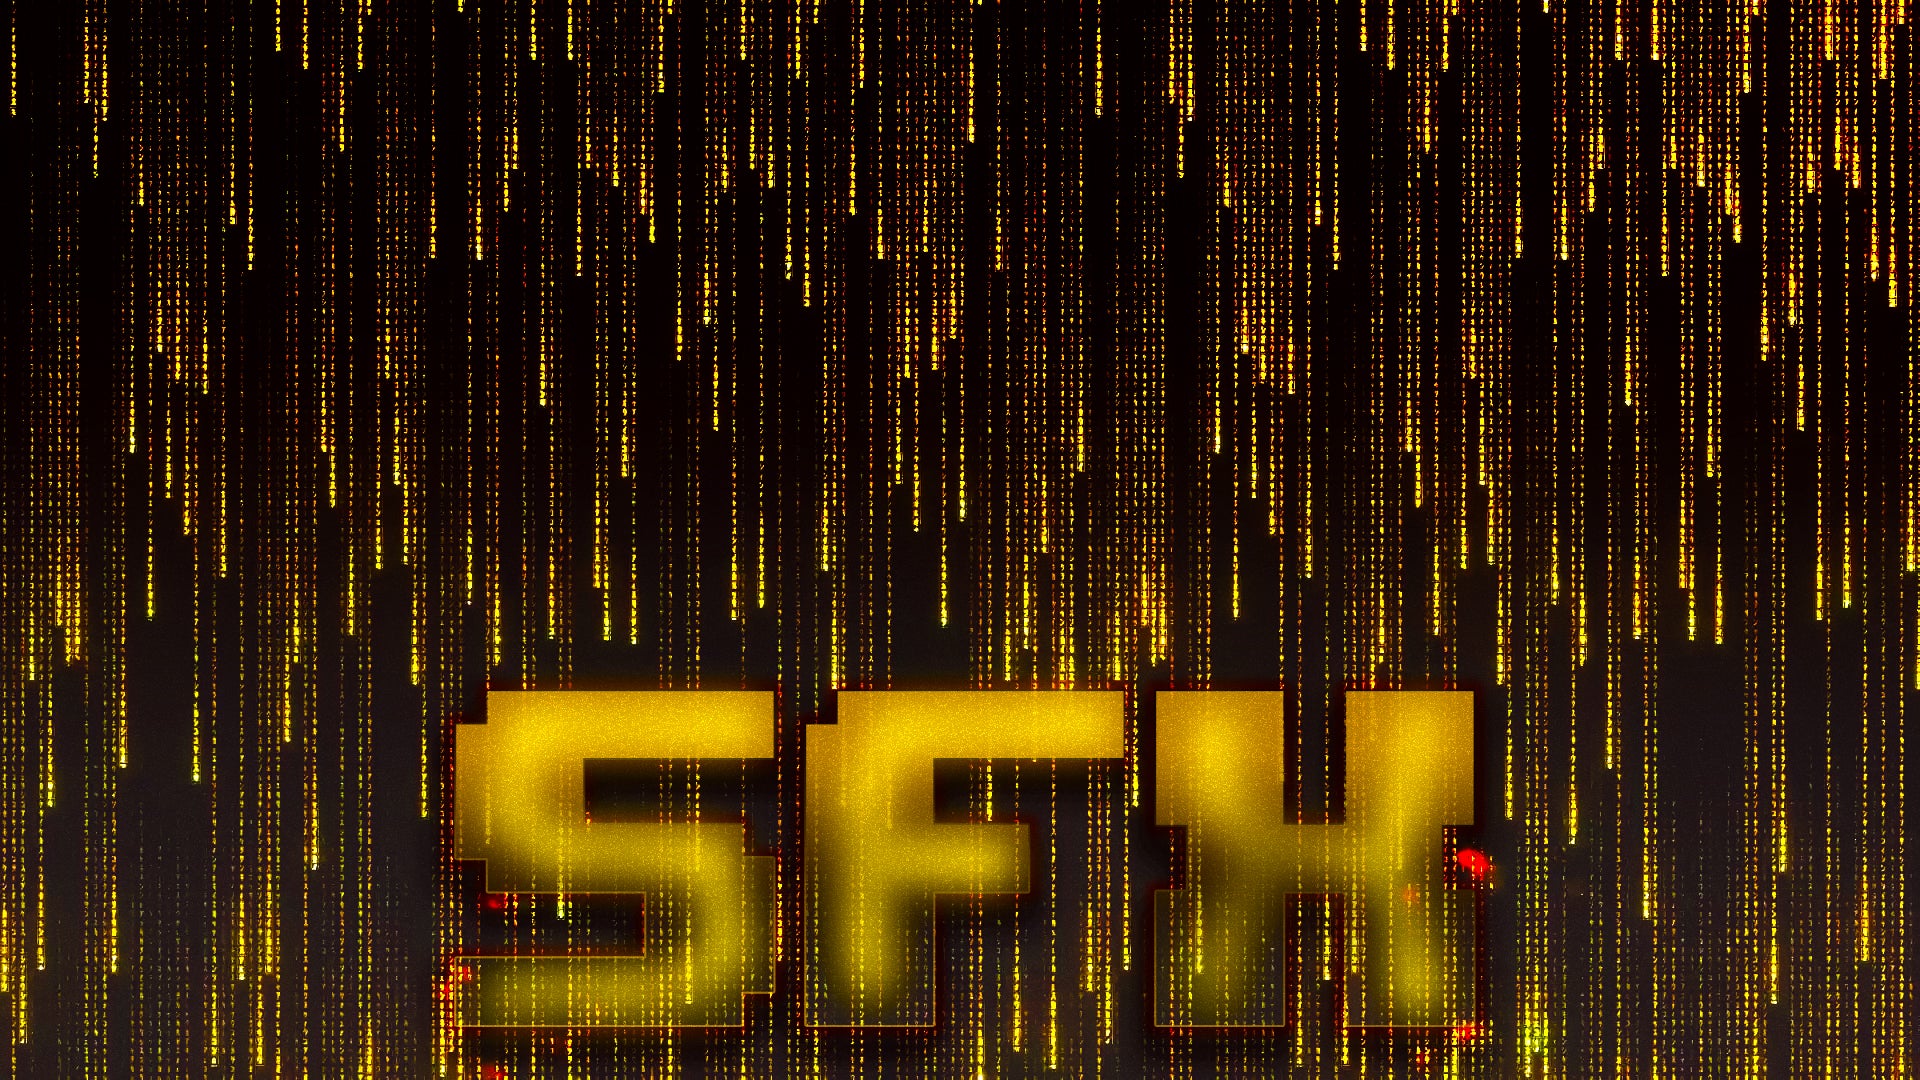 sxf sound effects code overlay matrix reality